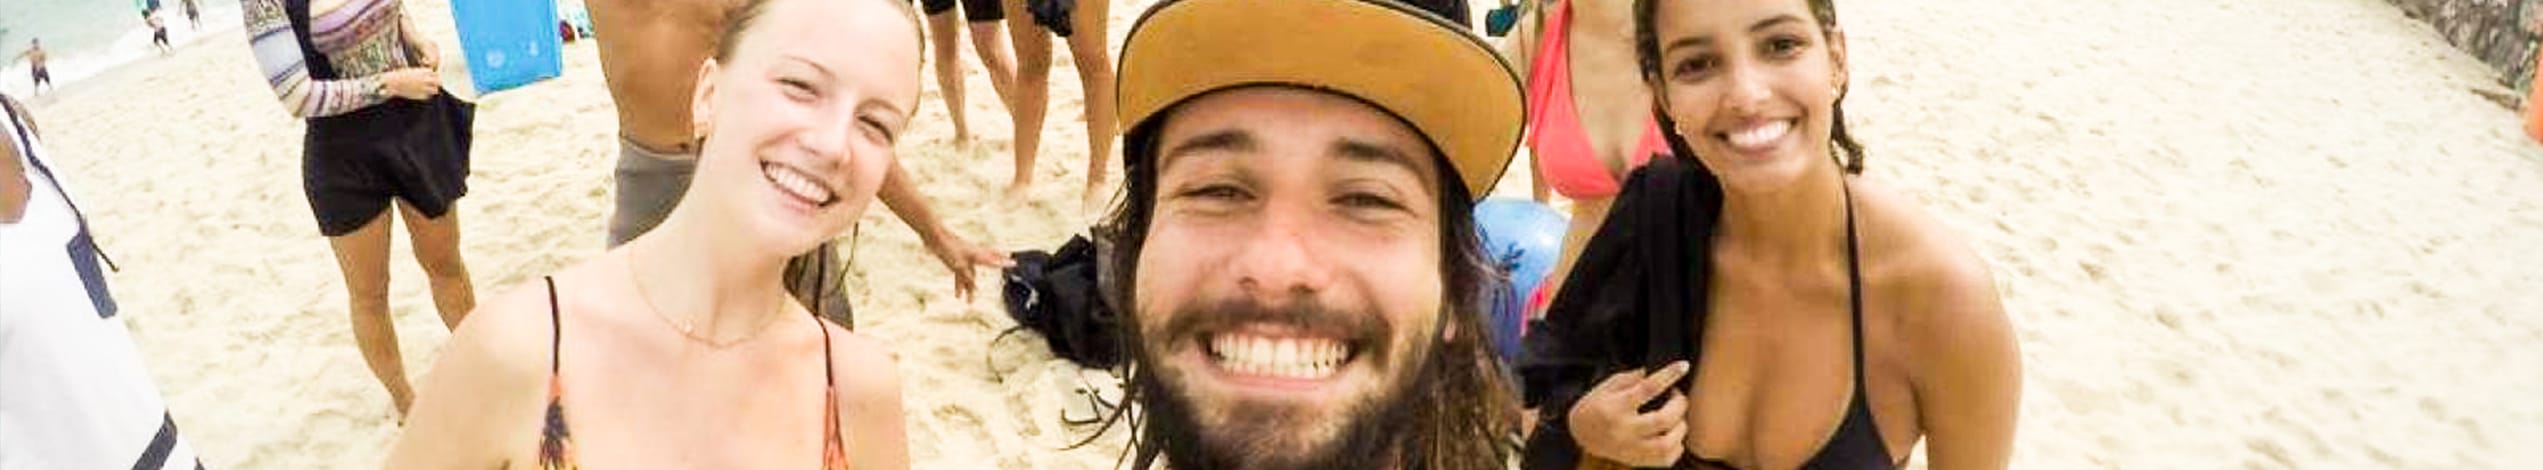 Surfing og backpacking i Brasilien